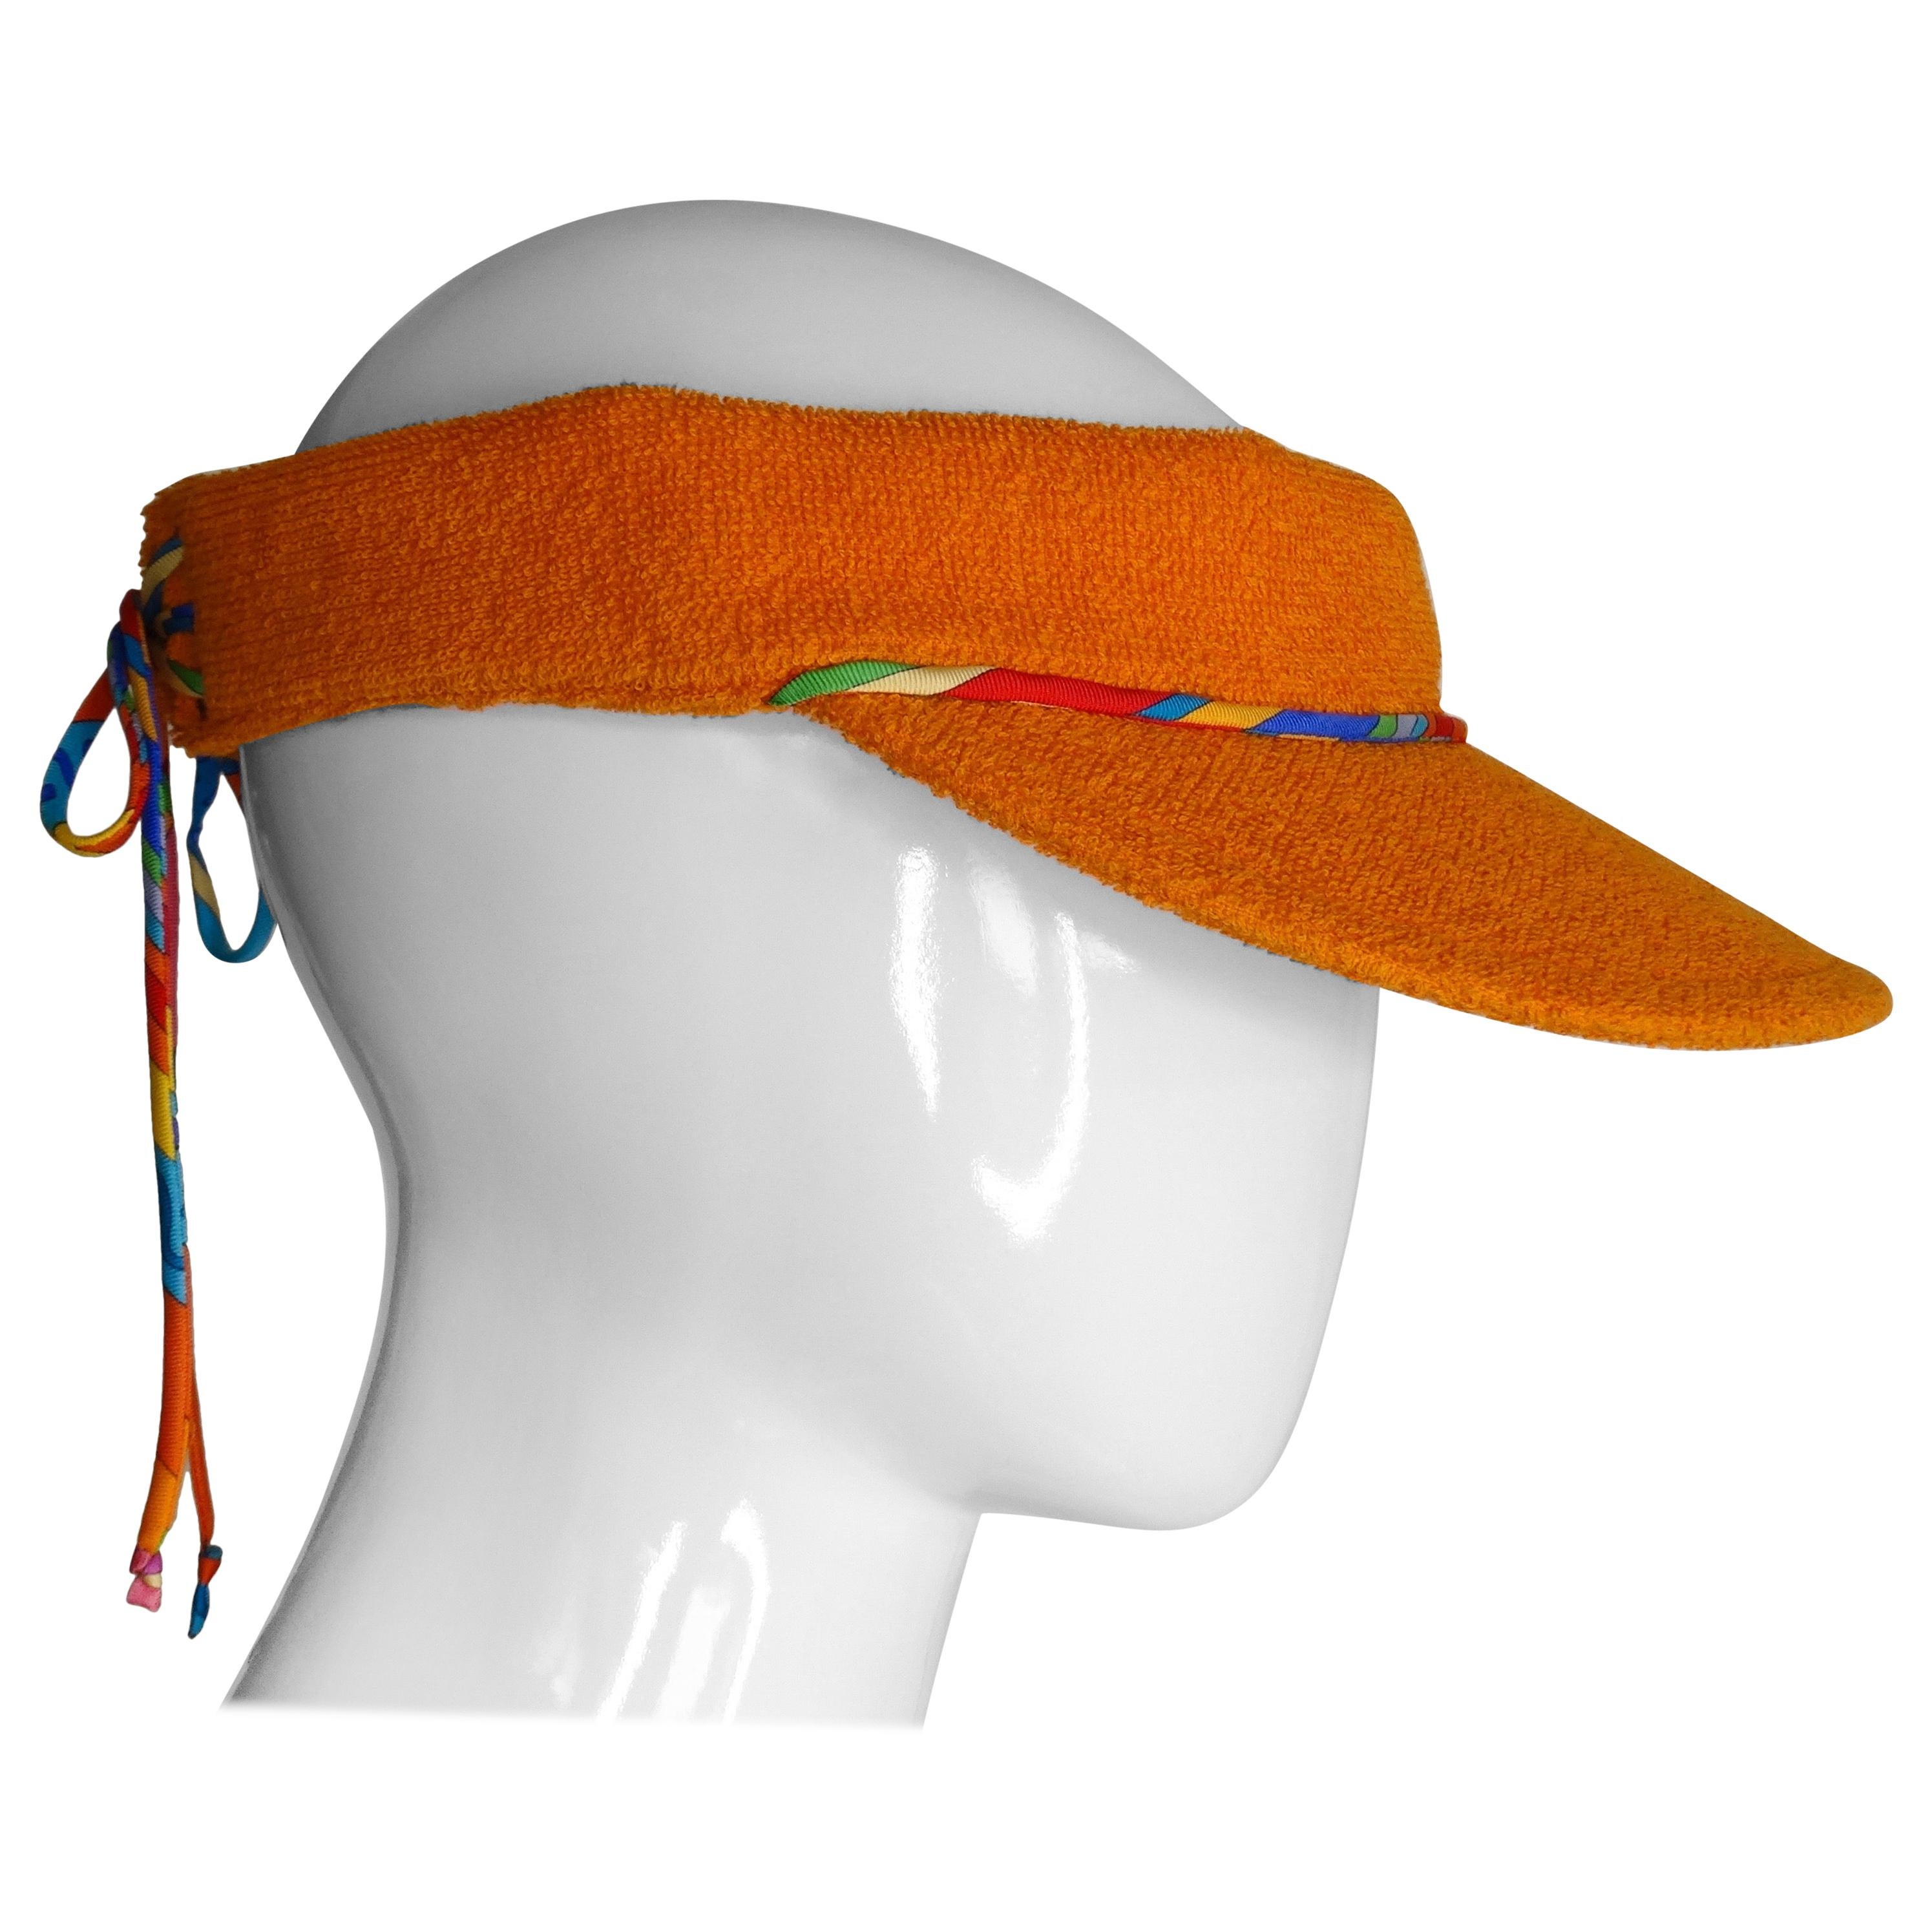  Hermès Casquette Oasis Orange Sun Visor Hat 